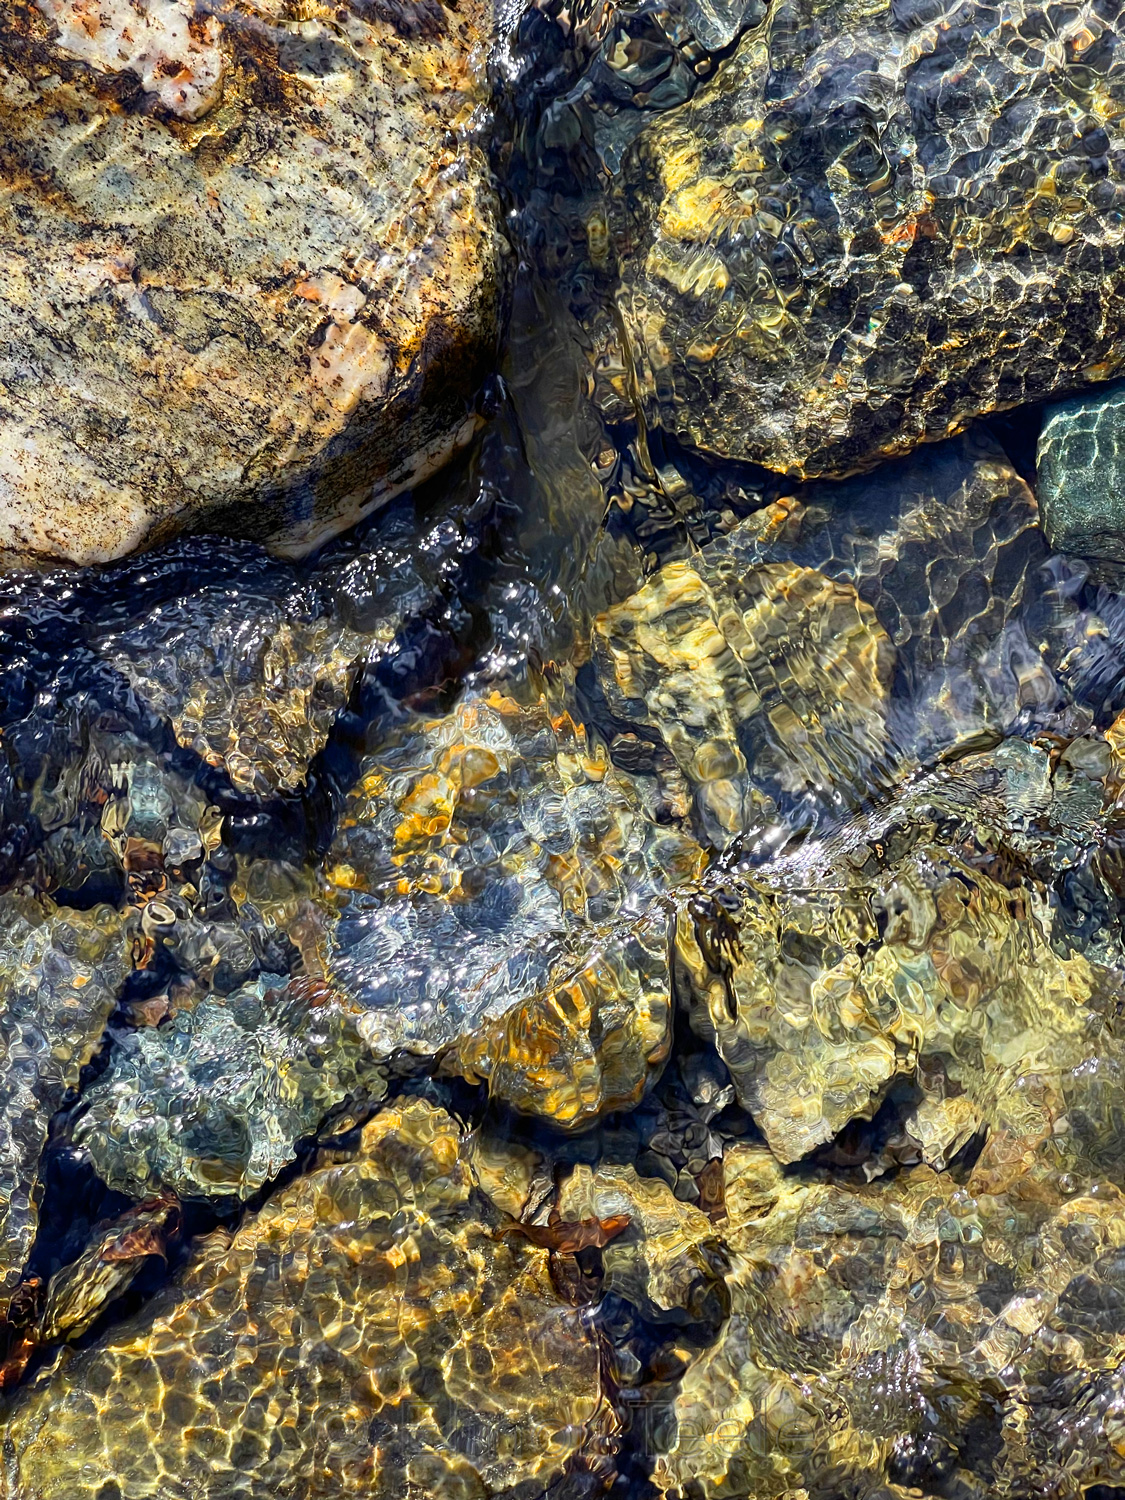 Rocks Underwater in Spring 4